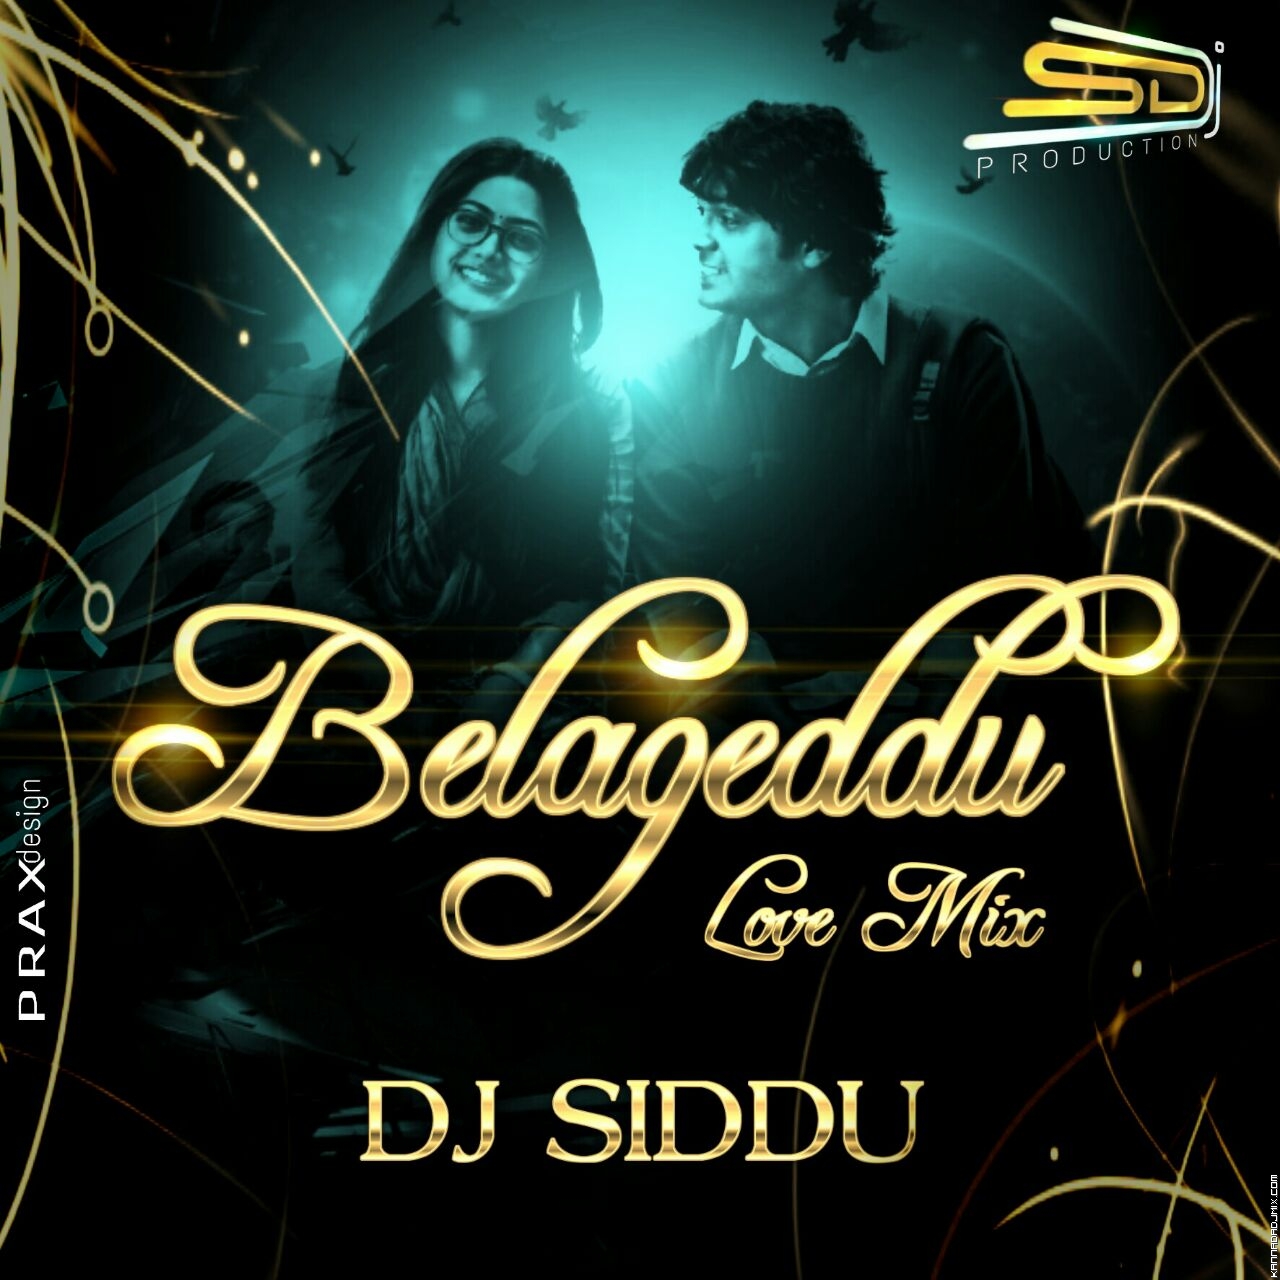 Belageddu Kirik Party [Love Dance Mix] Dj Siddu Dharwad.mp3